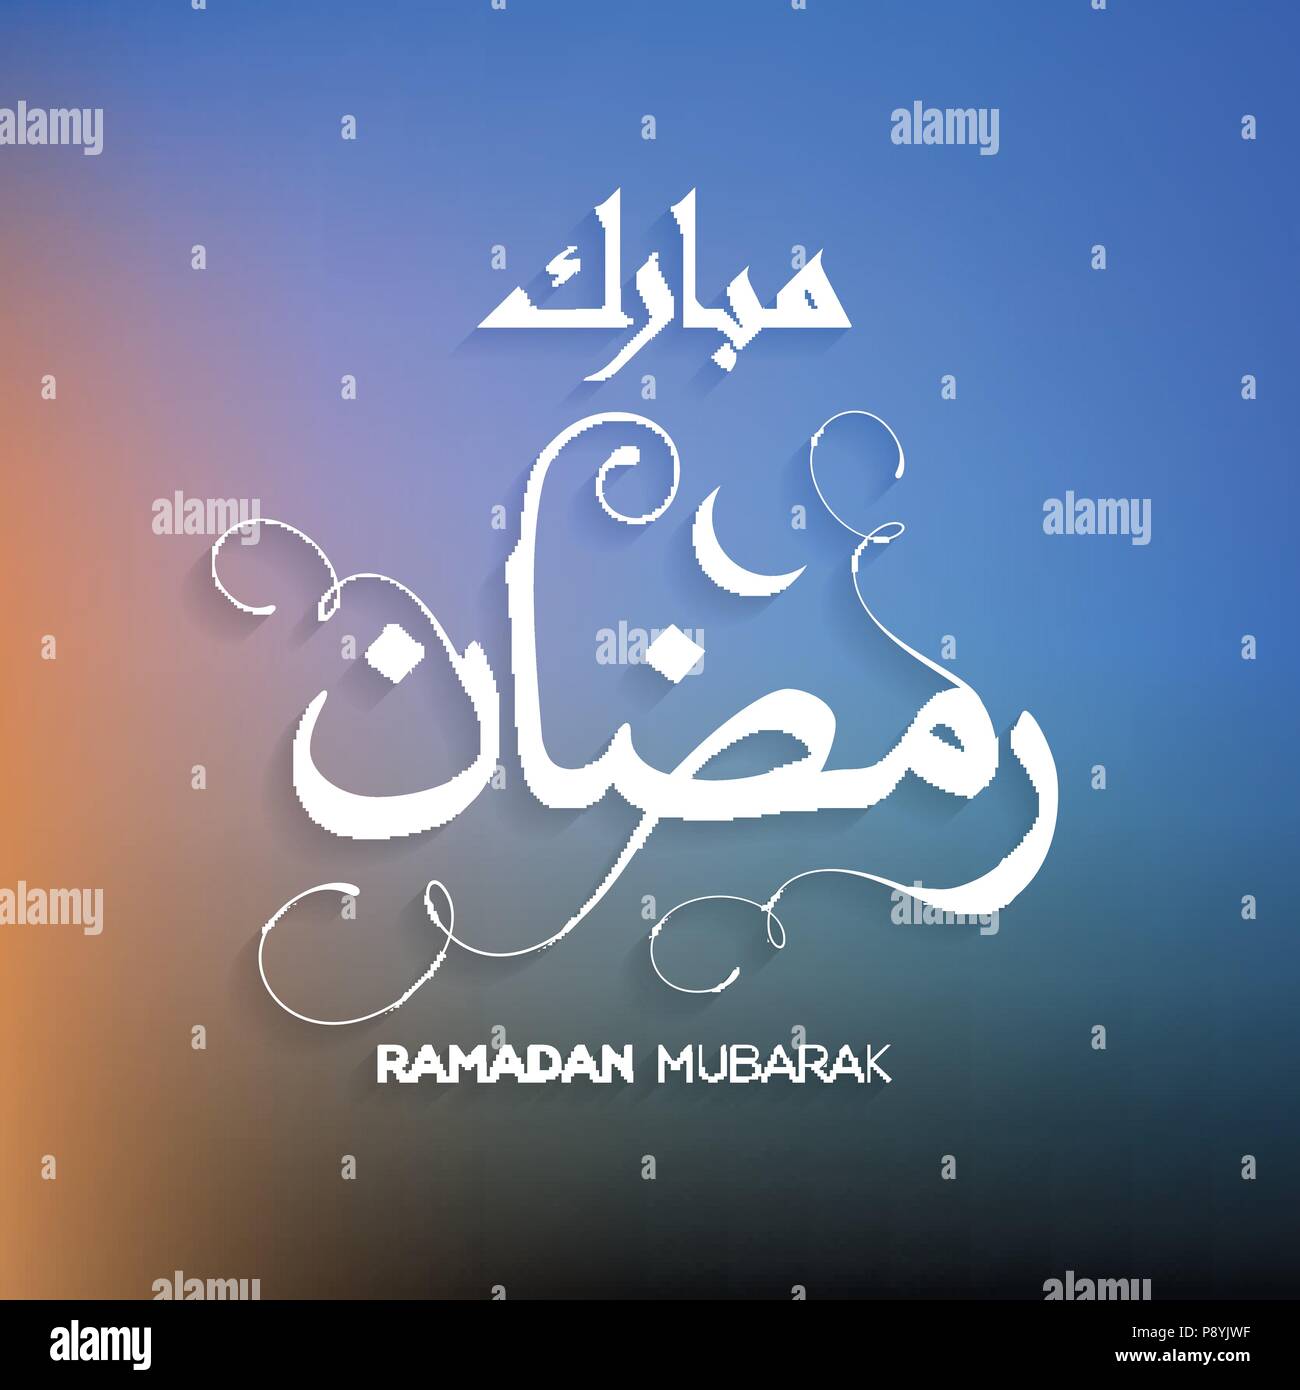 Ramadan Kareem Beautiful Greeting Card With Arabic Calligraphy Which